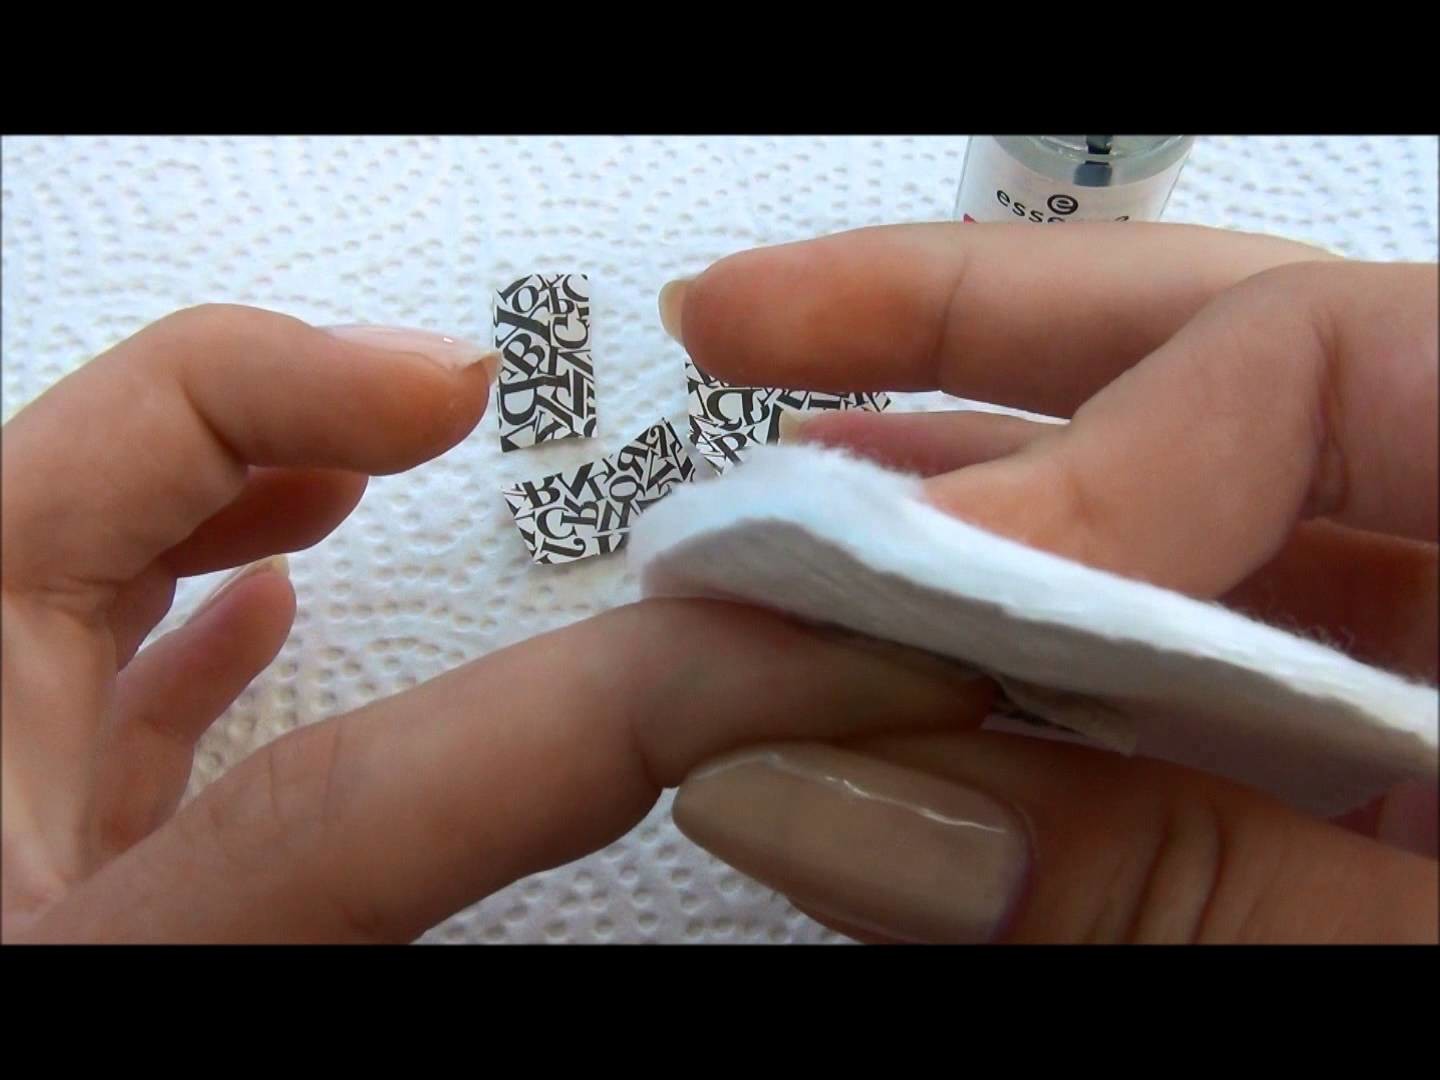 Paper print manicure van essence